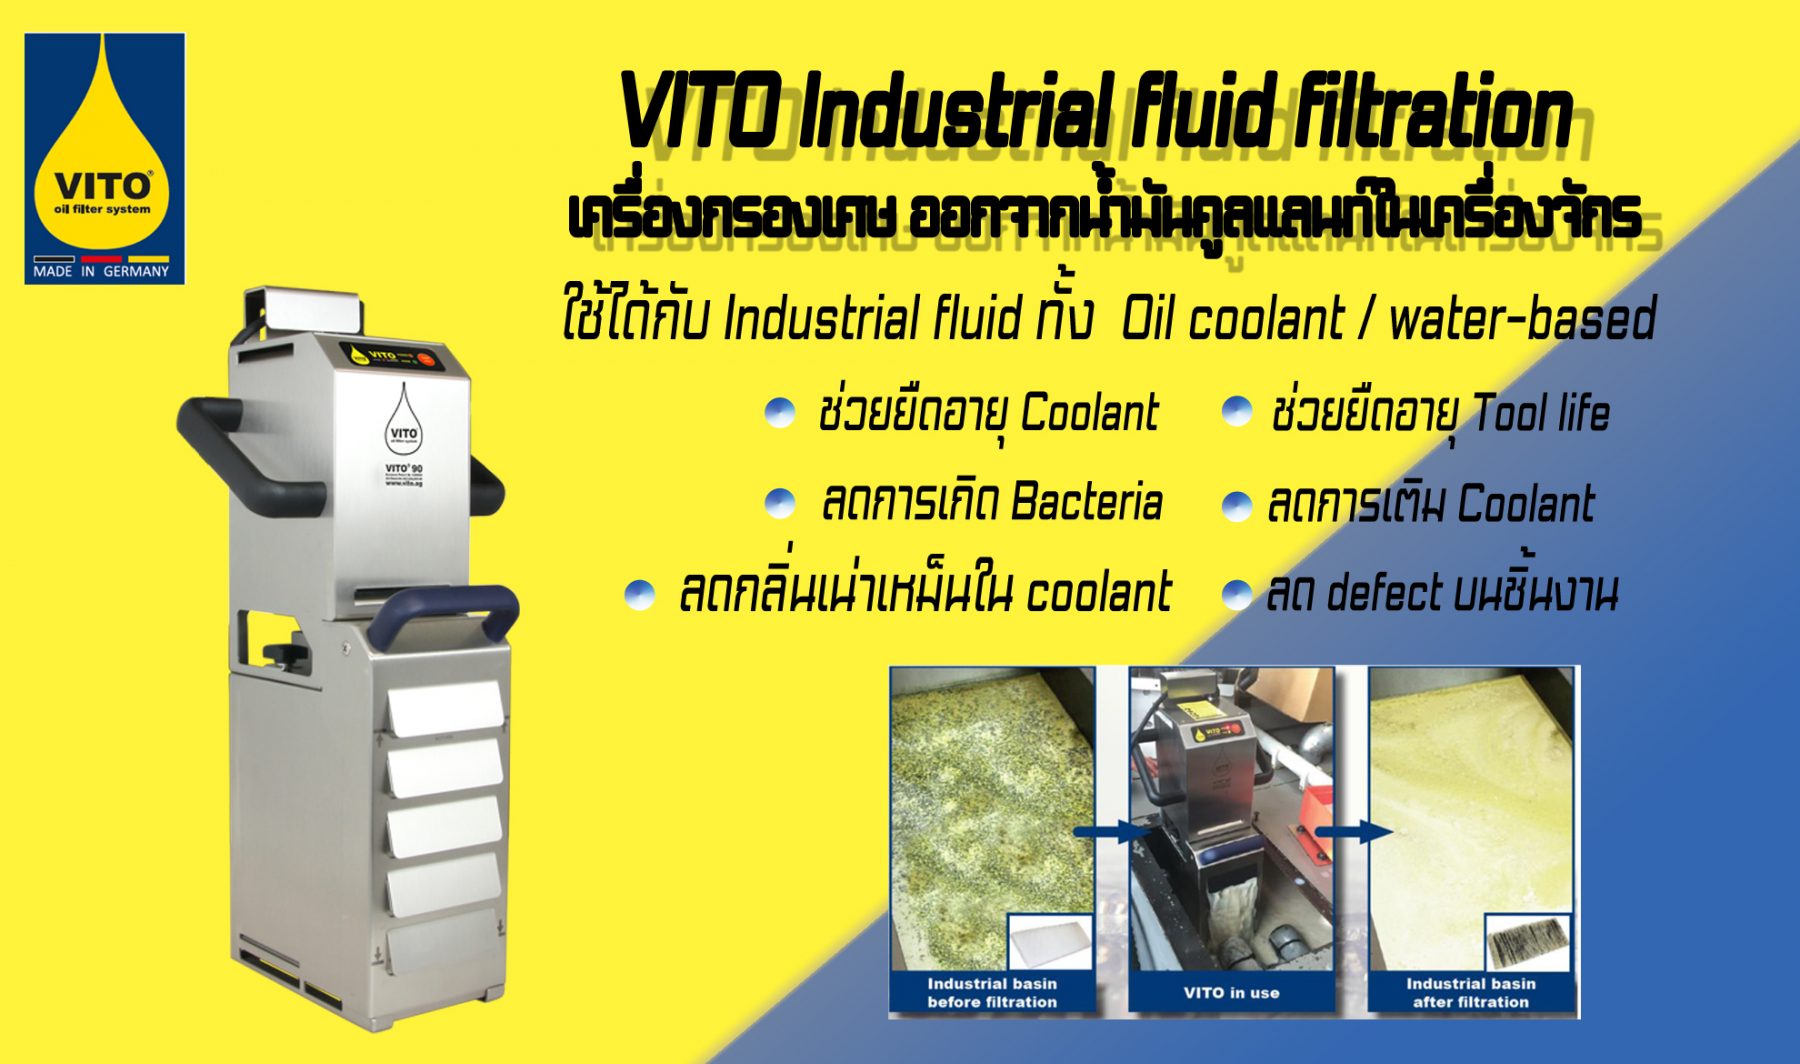 Industrial fluid filtration